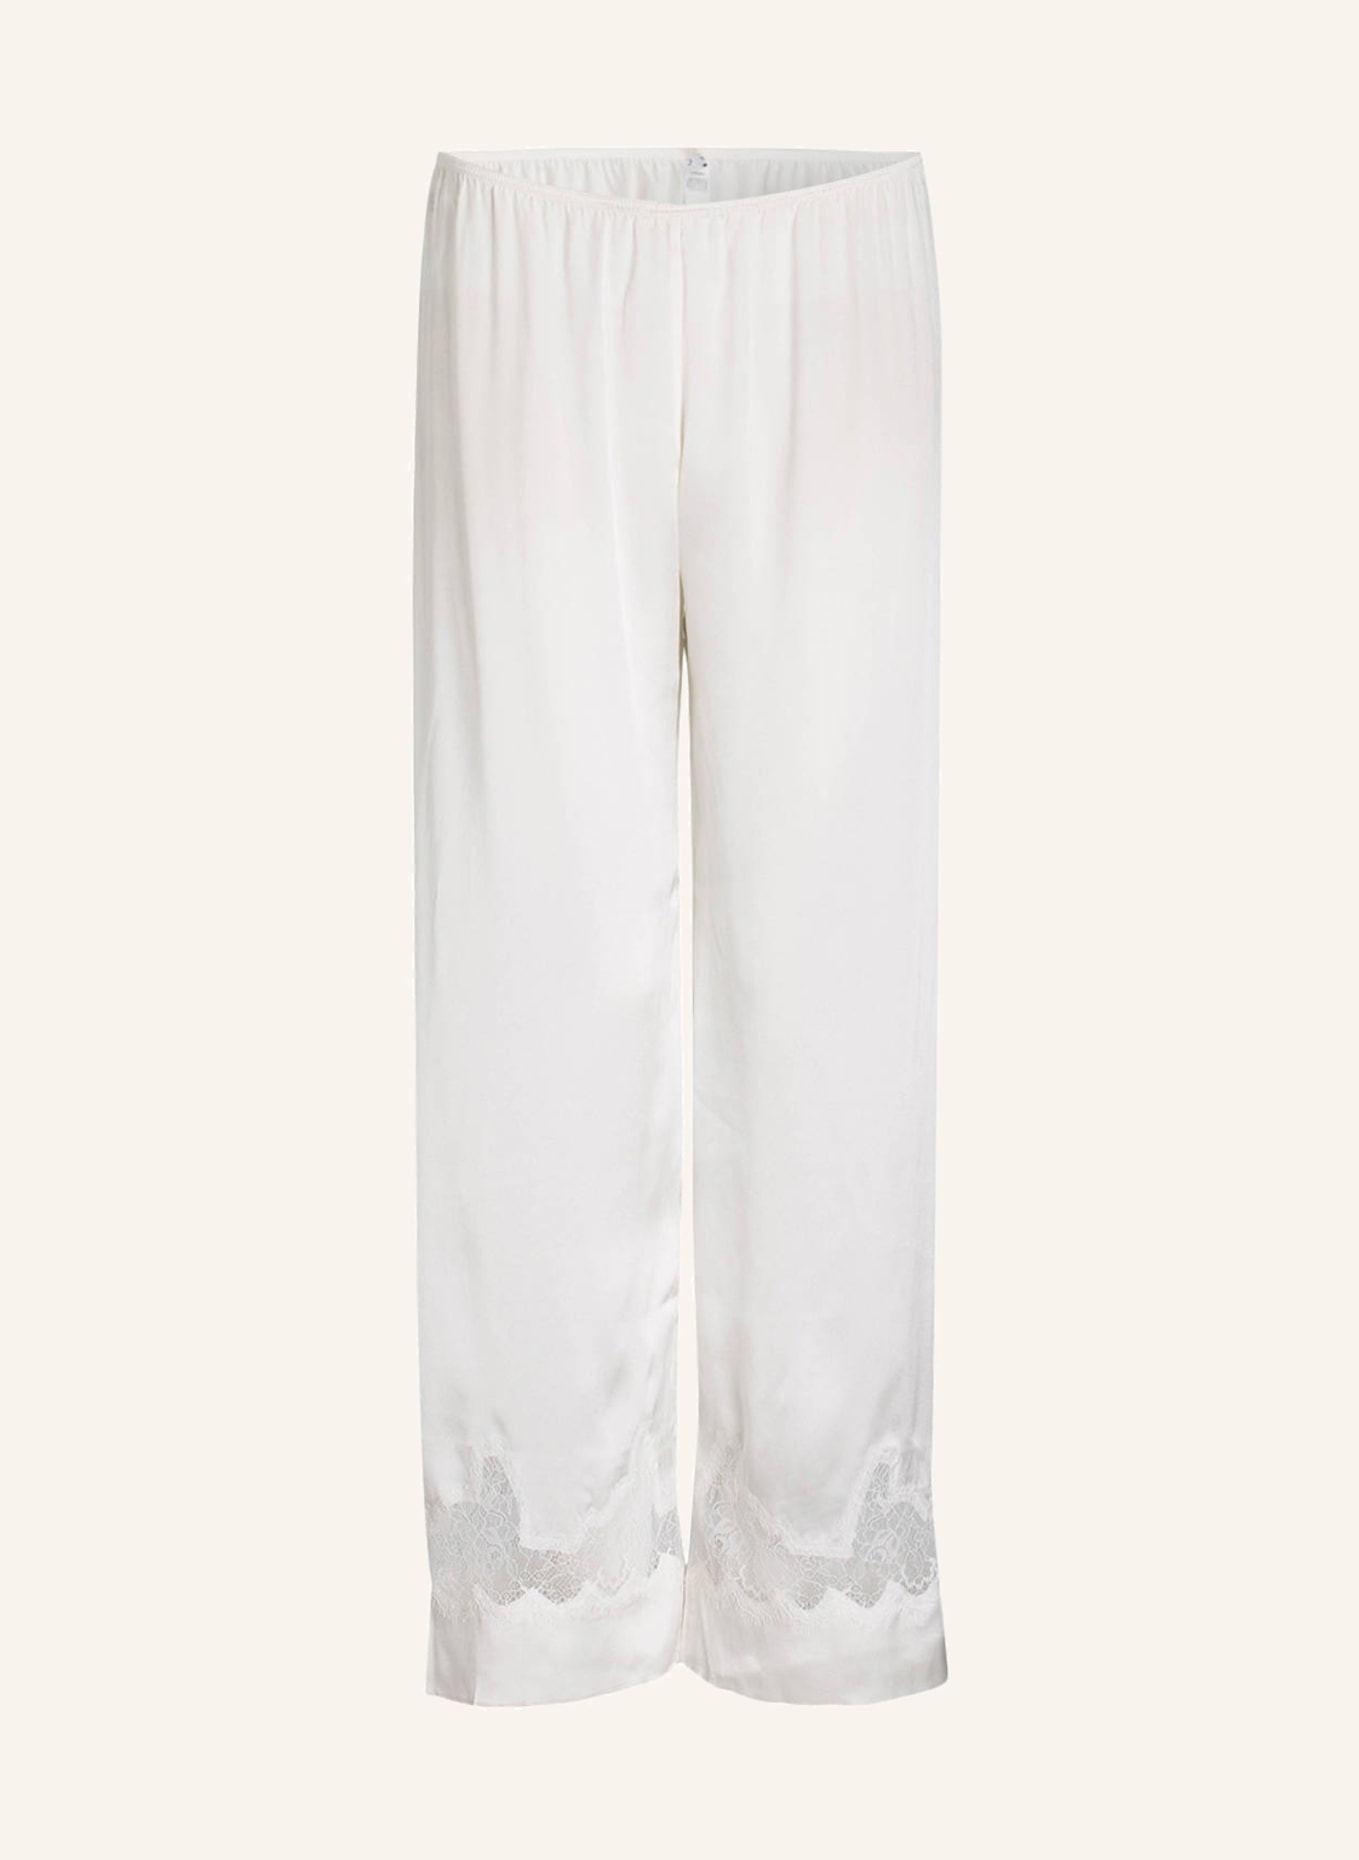 SIMONE PÉRÈLE Pajama pants NOCTURNE made of silk, Color: IVORY (Image 1)